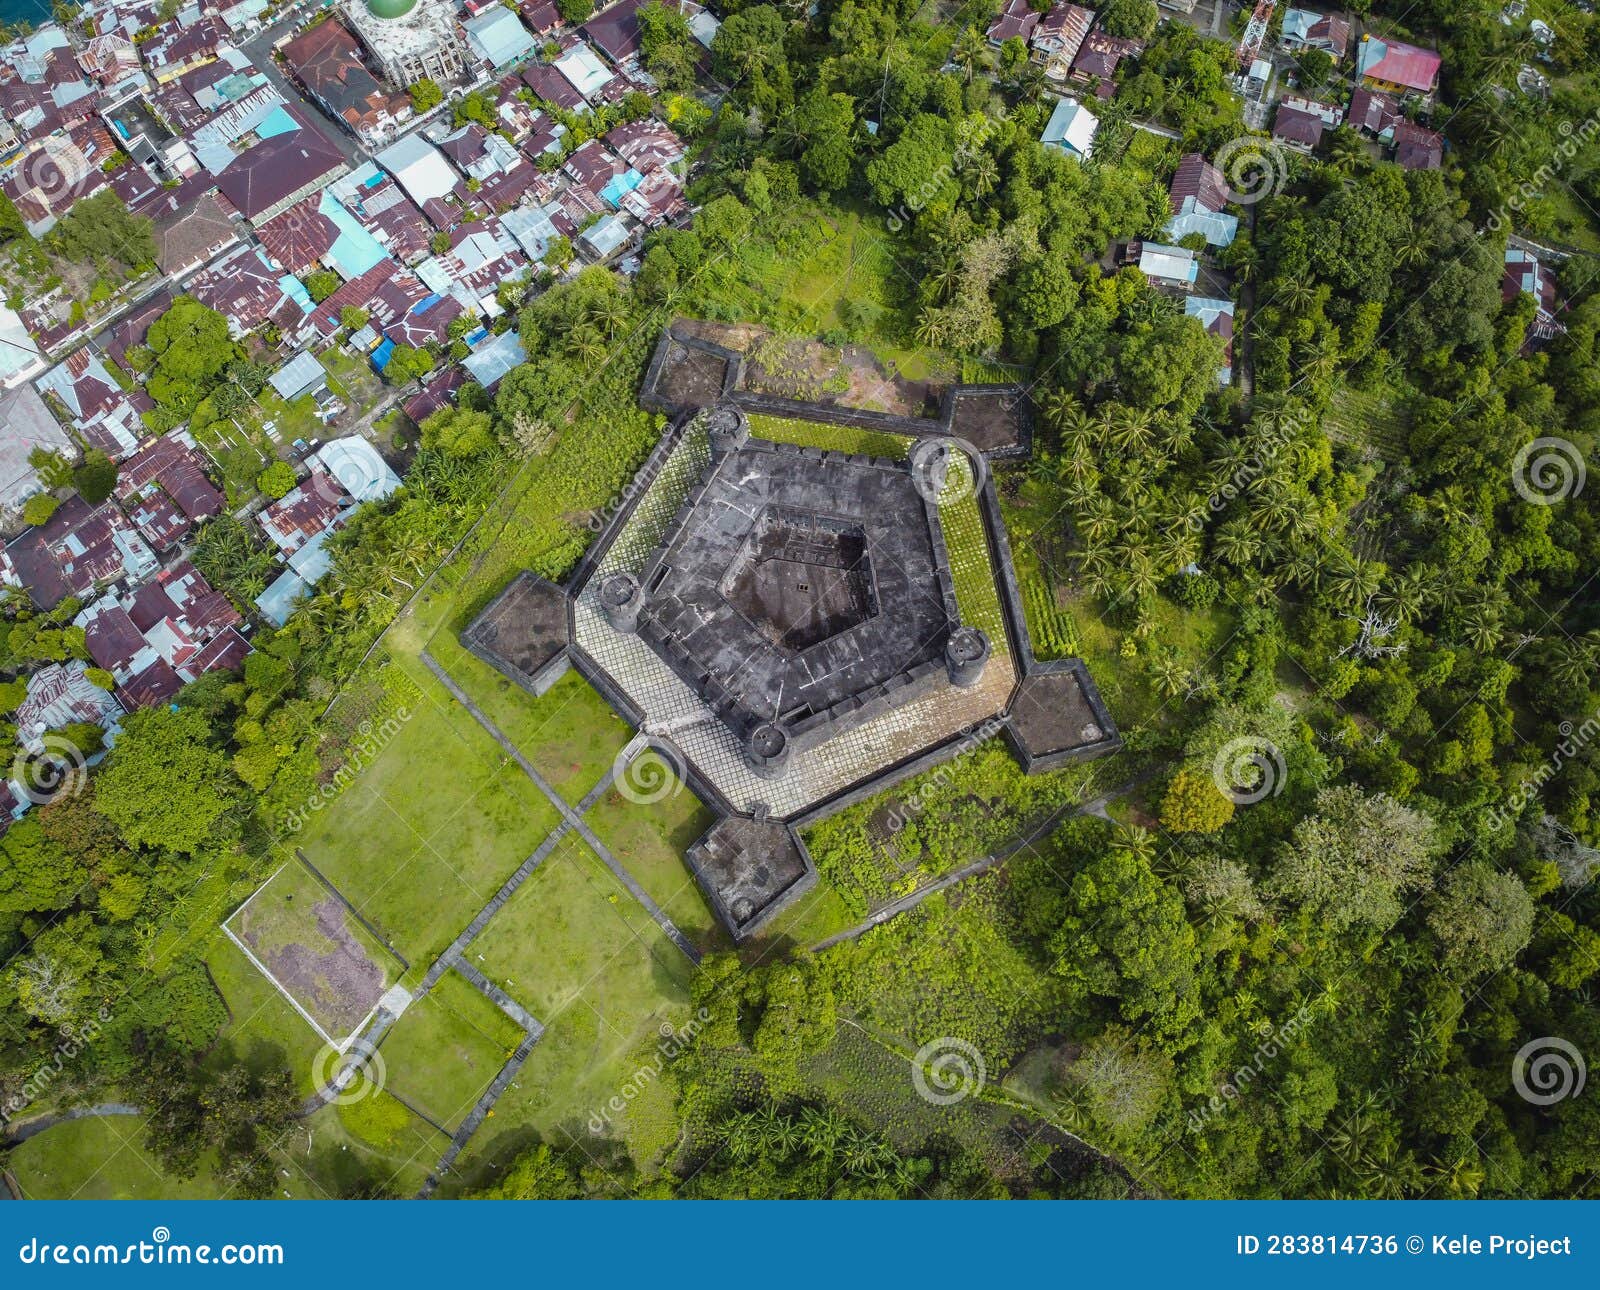 belgica fort in banda naira island, central maluku, indonesia